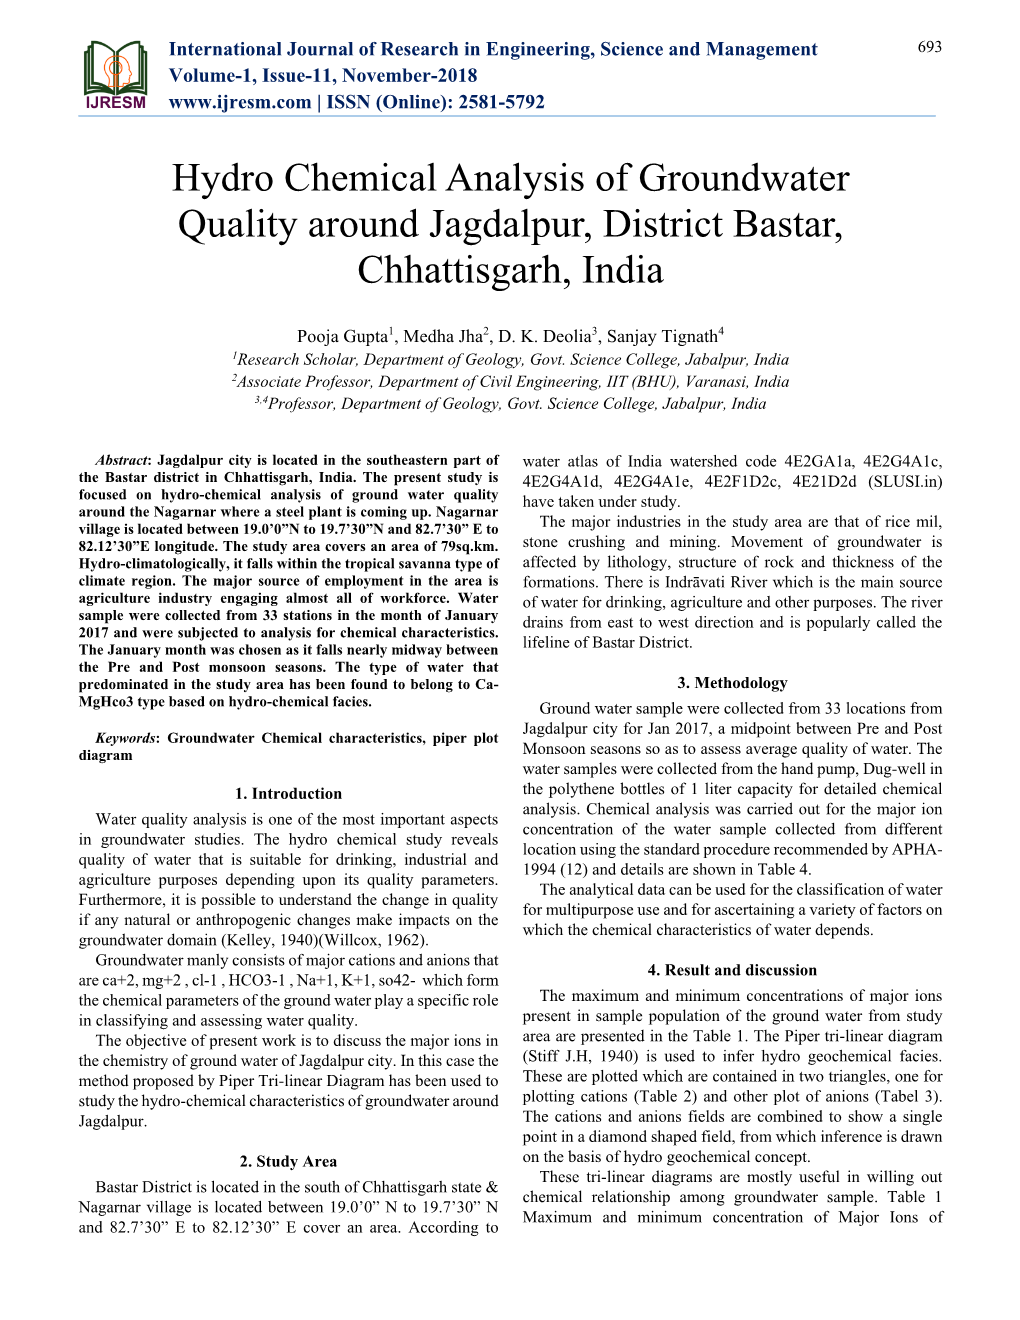 Hydro Chemical Analysis of Groundwater Quality Around Jagdalpur, District Bastar, Chhattisgarh, India